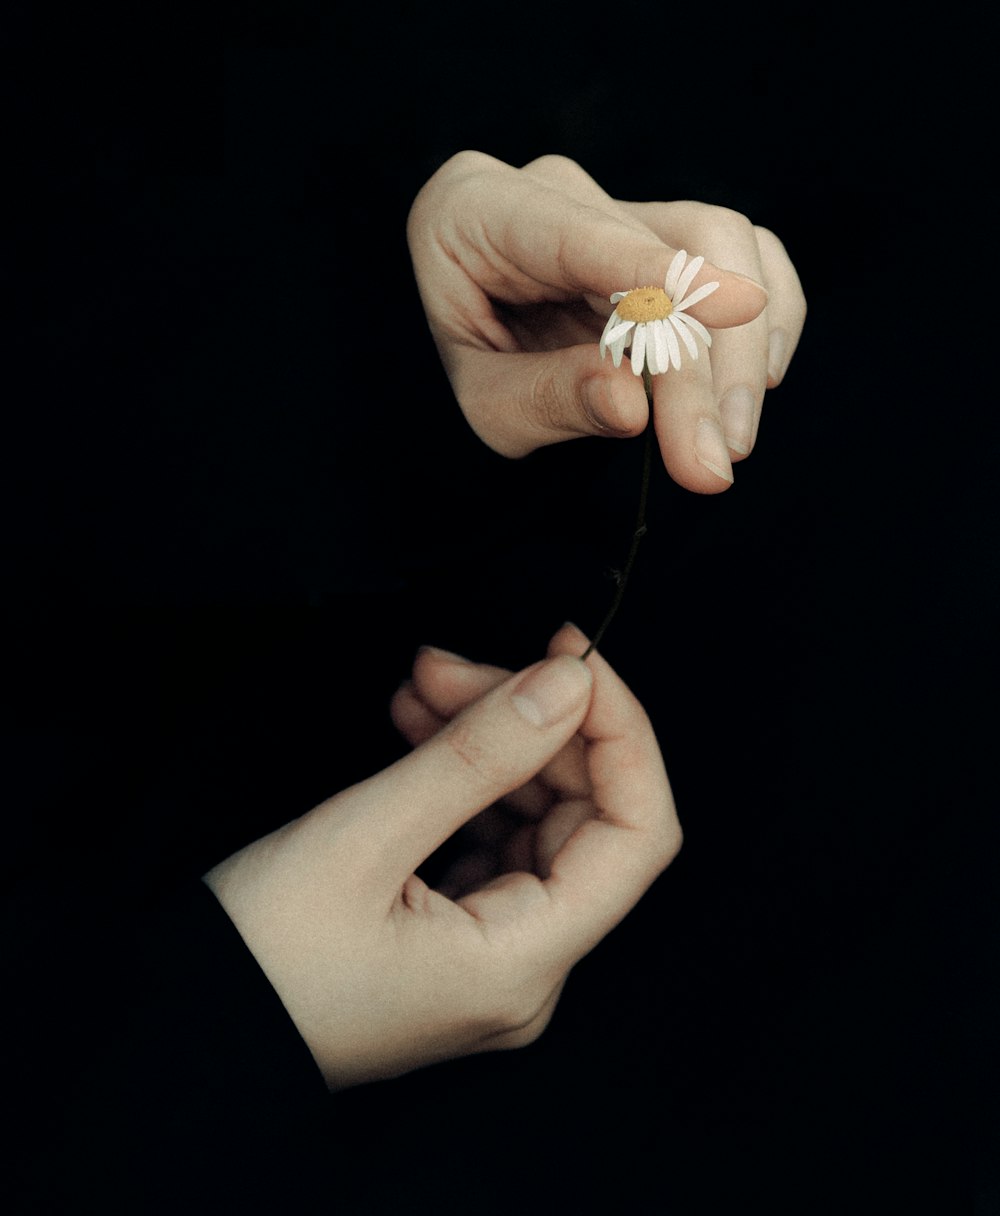 person holding white flower in dark room